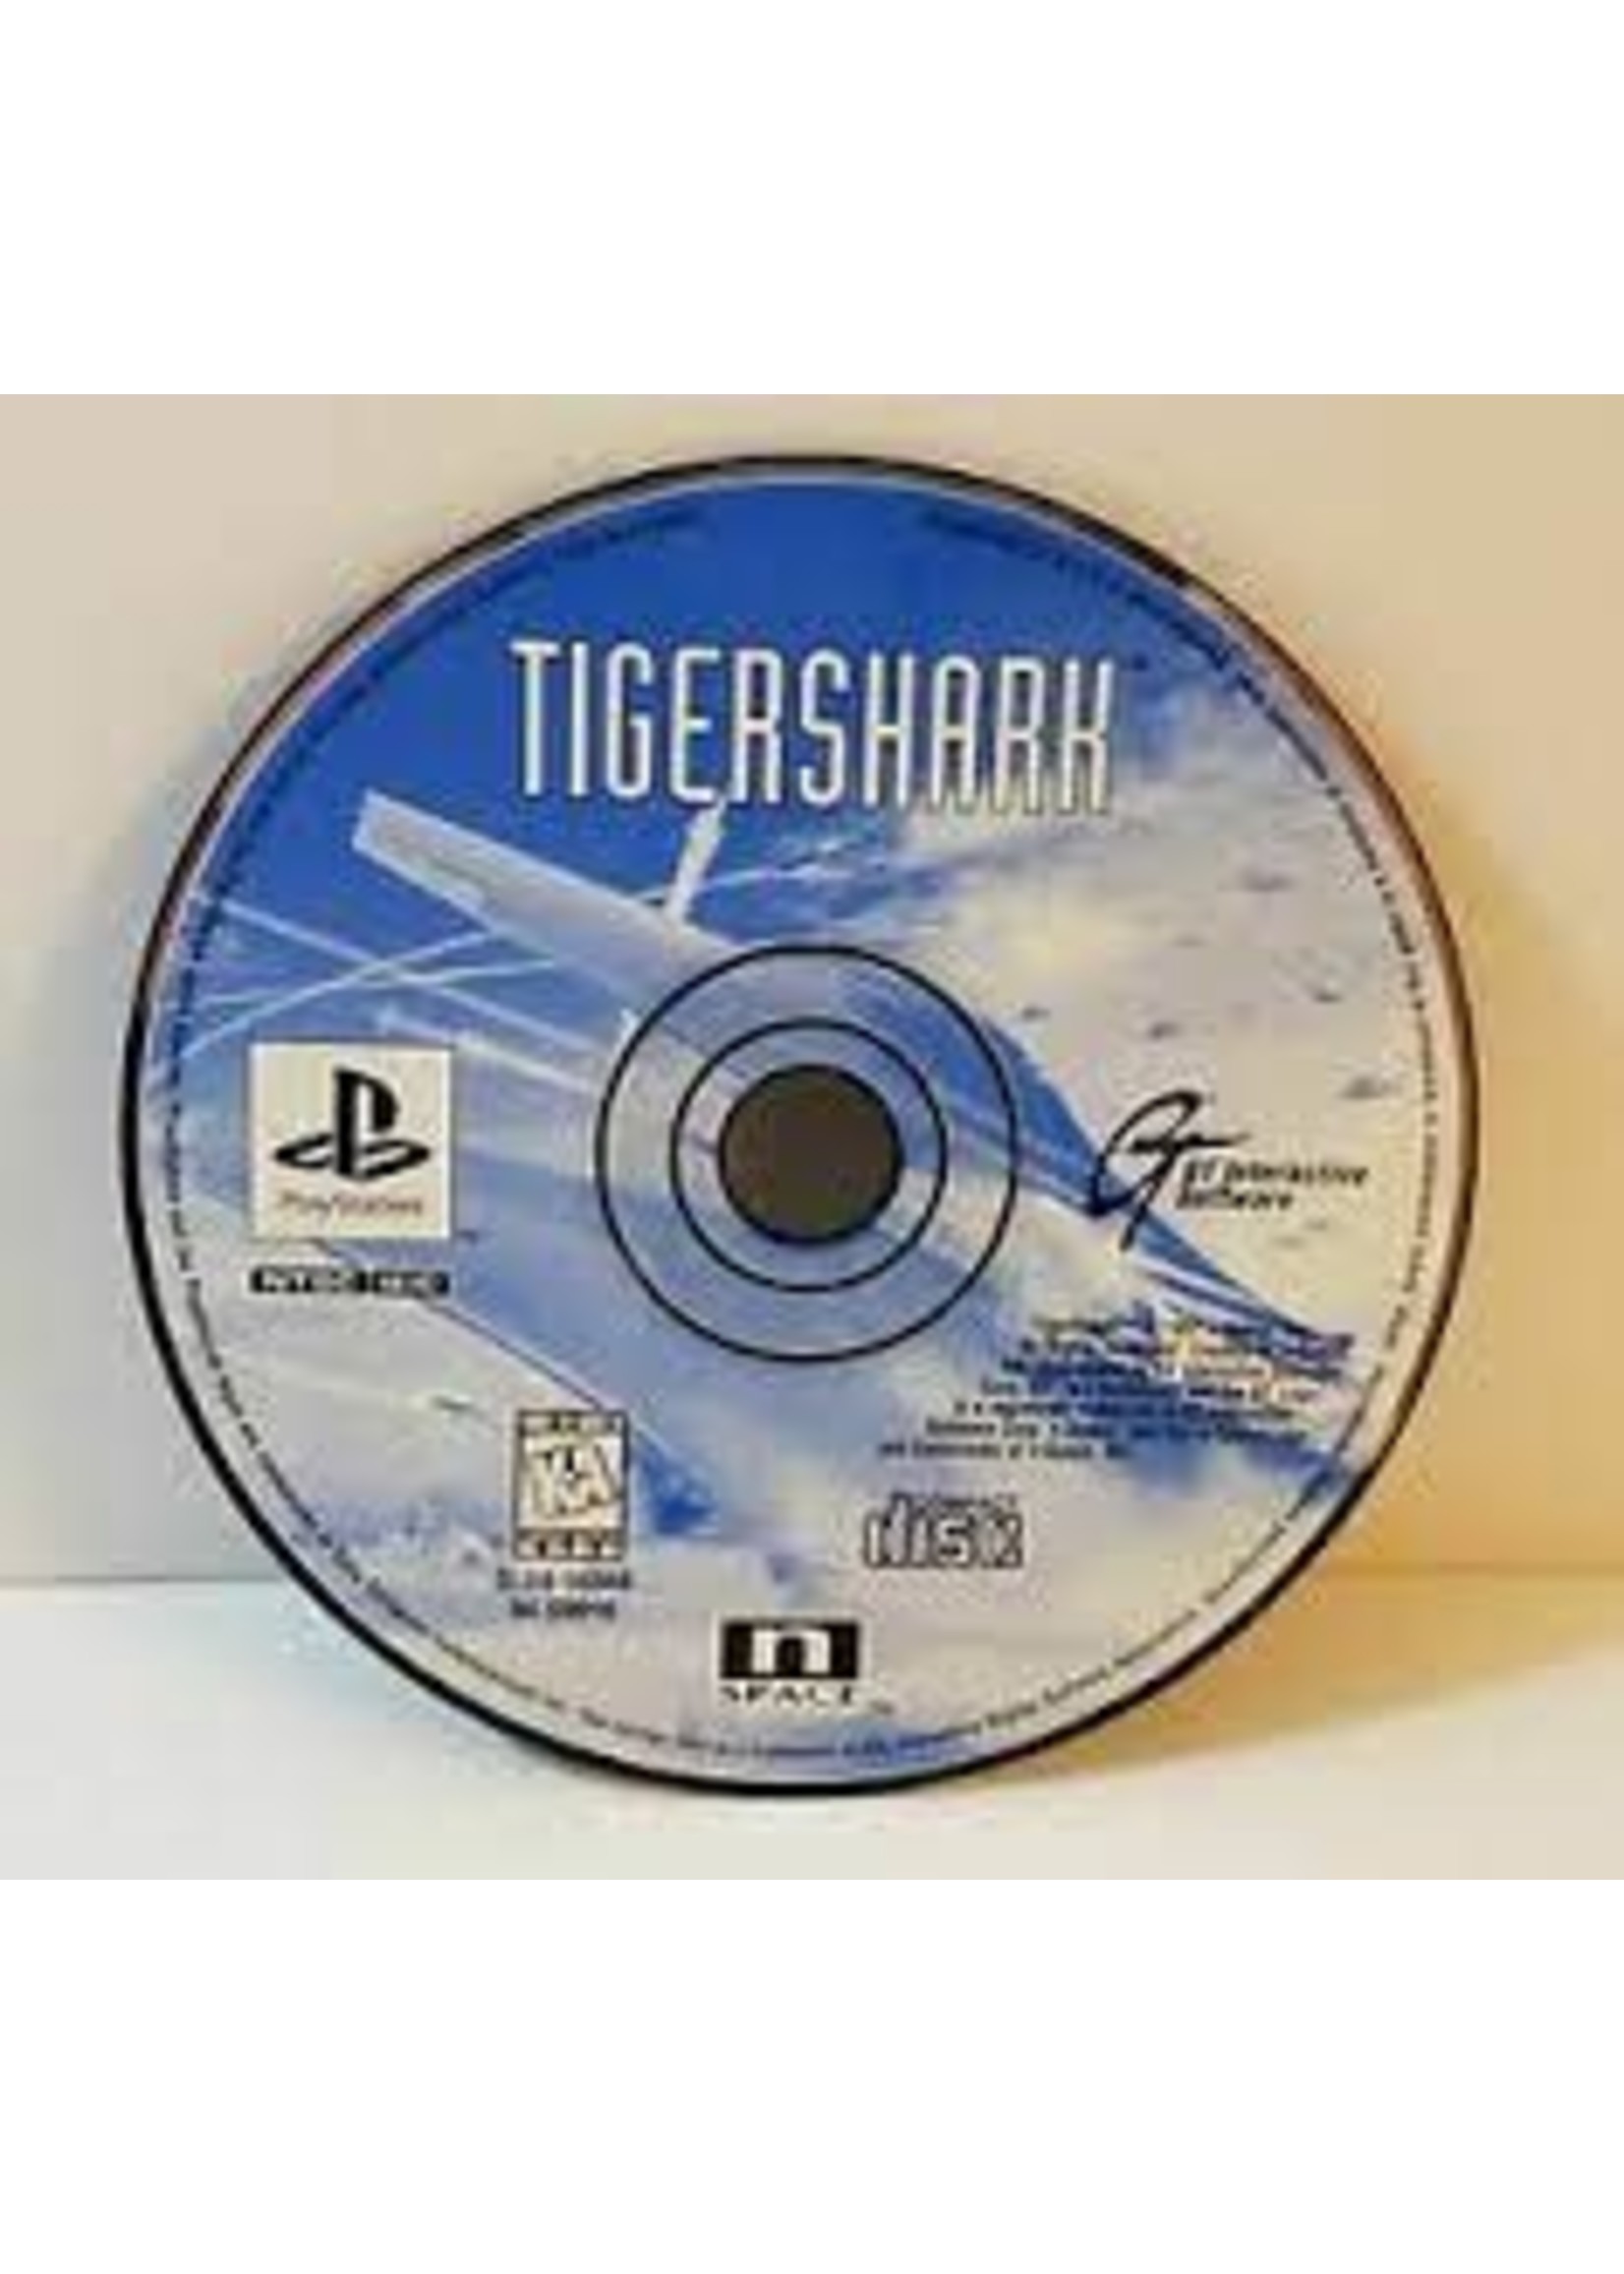 Sony Playstation 1 (PS1) Tiger Shark - Print